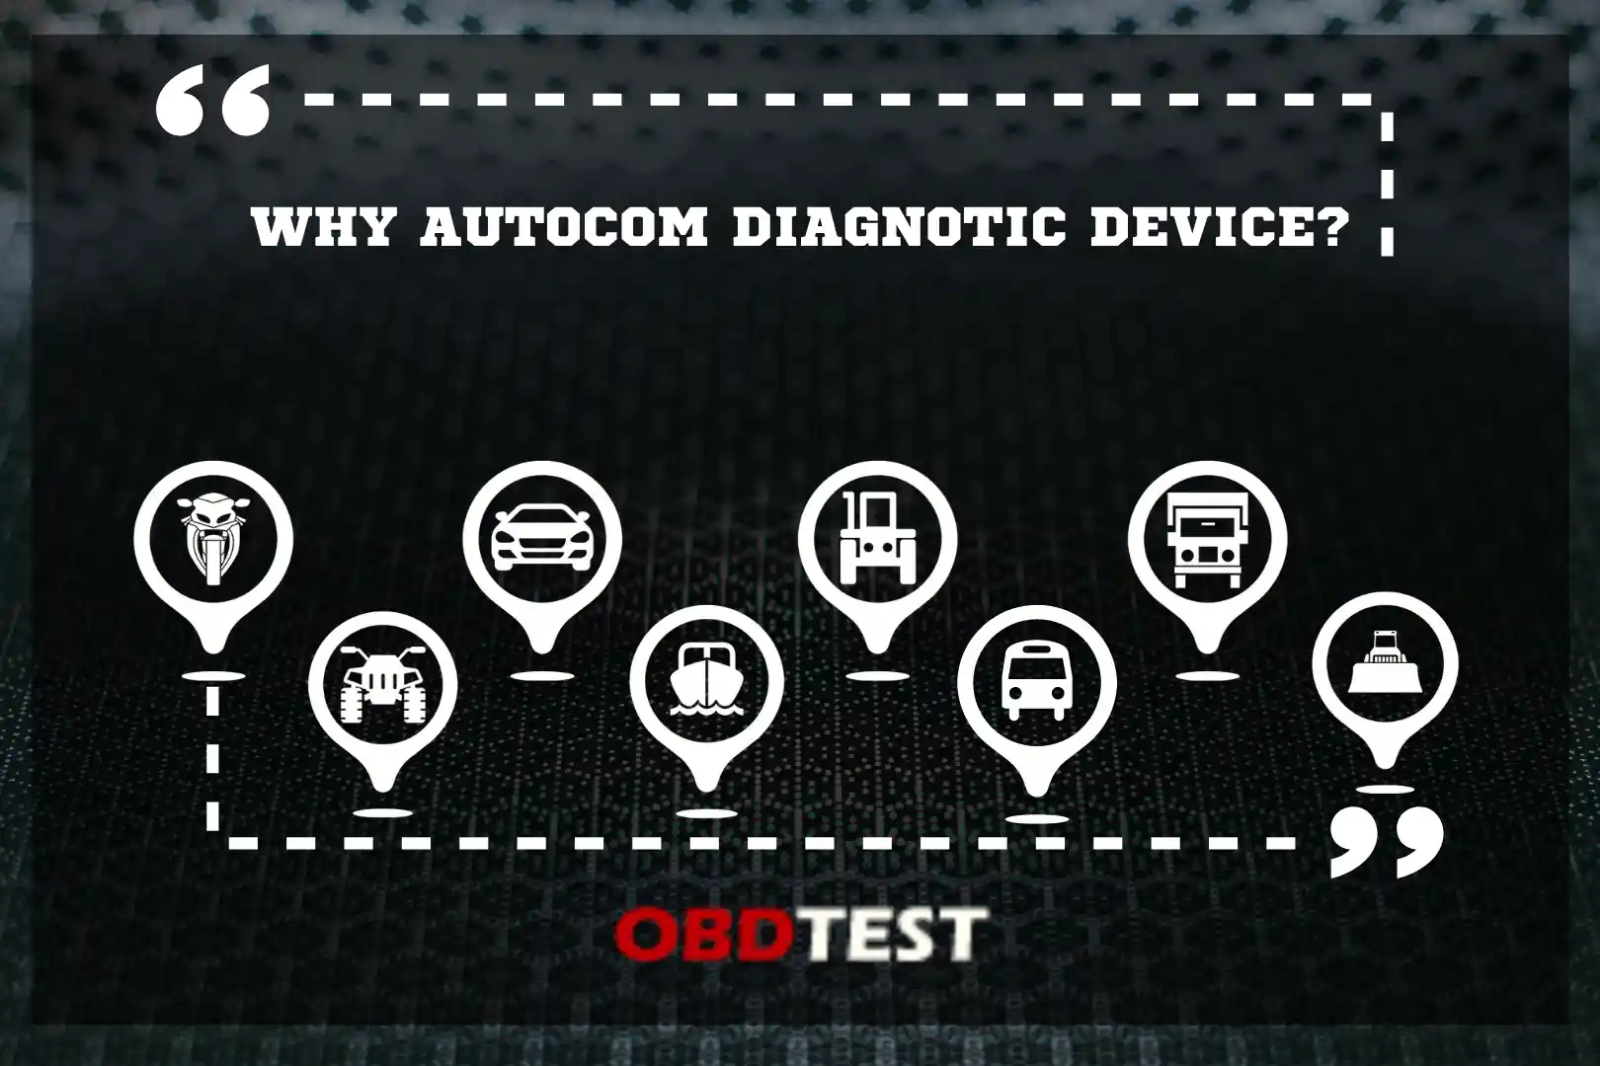 Why Autocom Diagnotic Device?